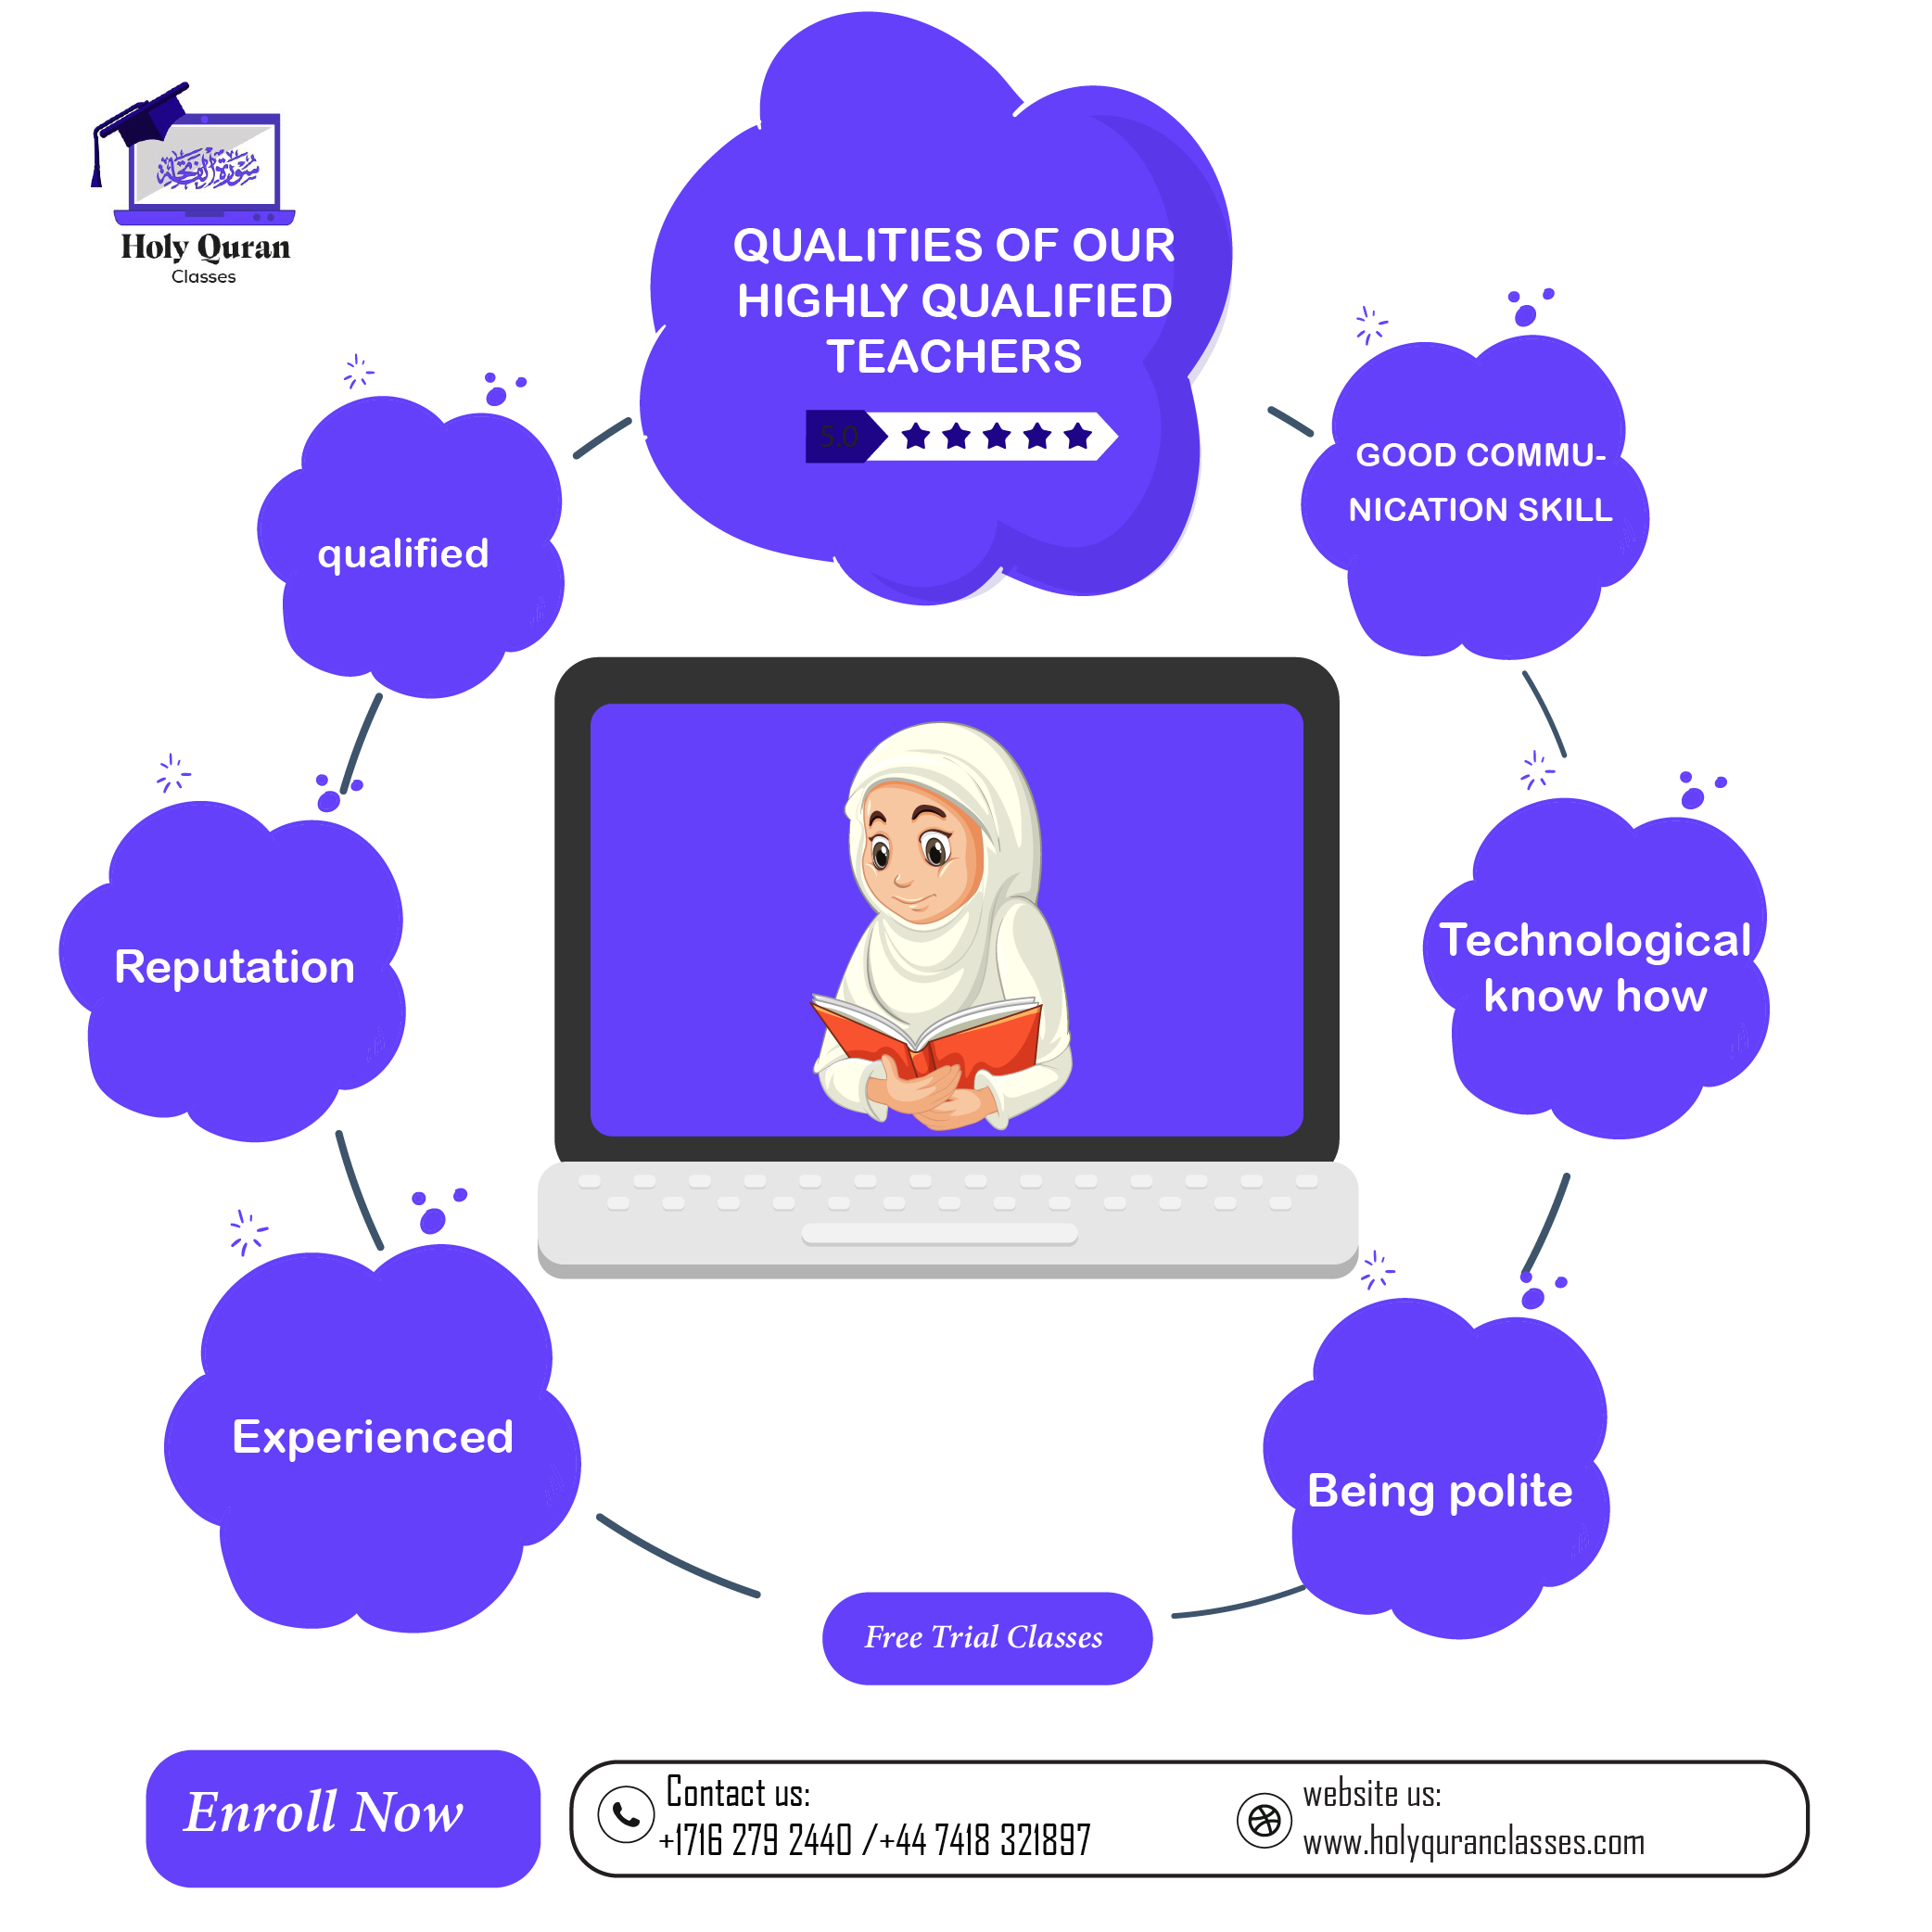 online quran classes on skype